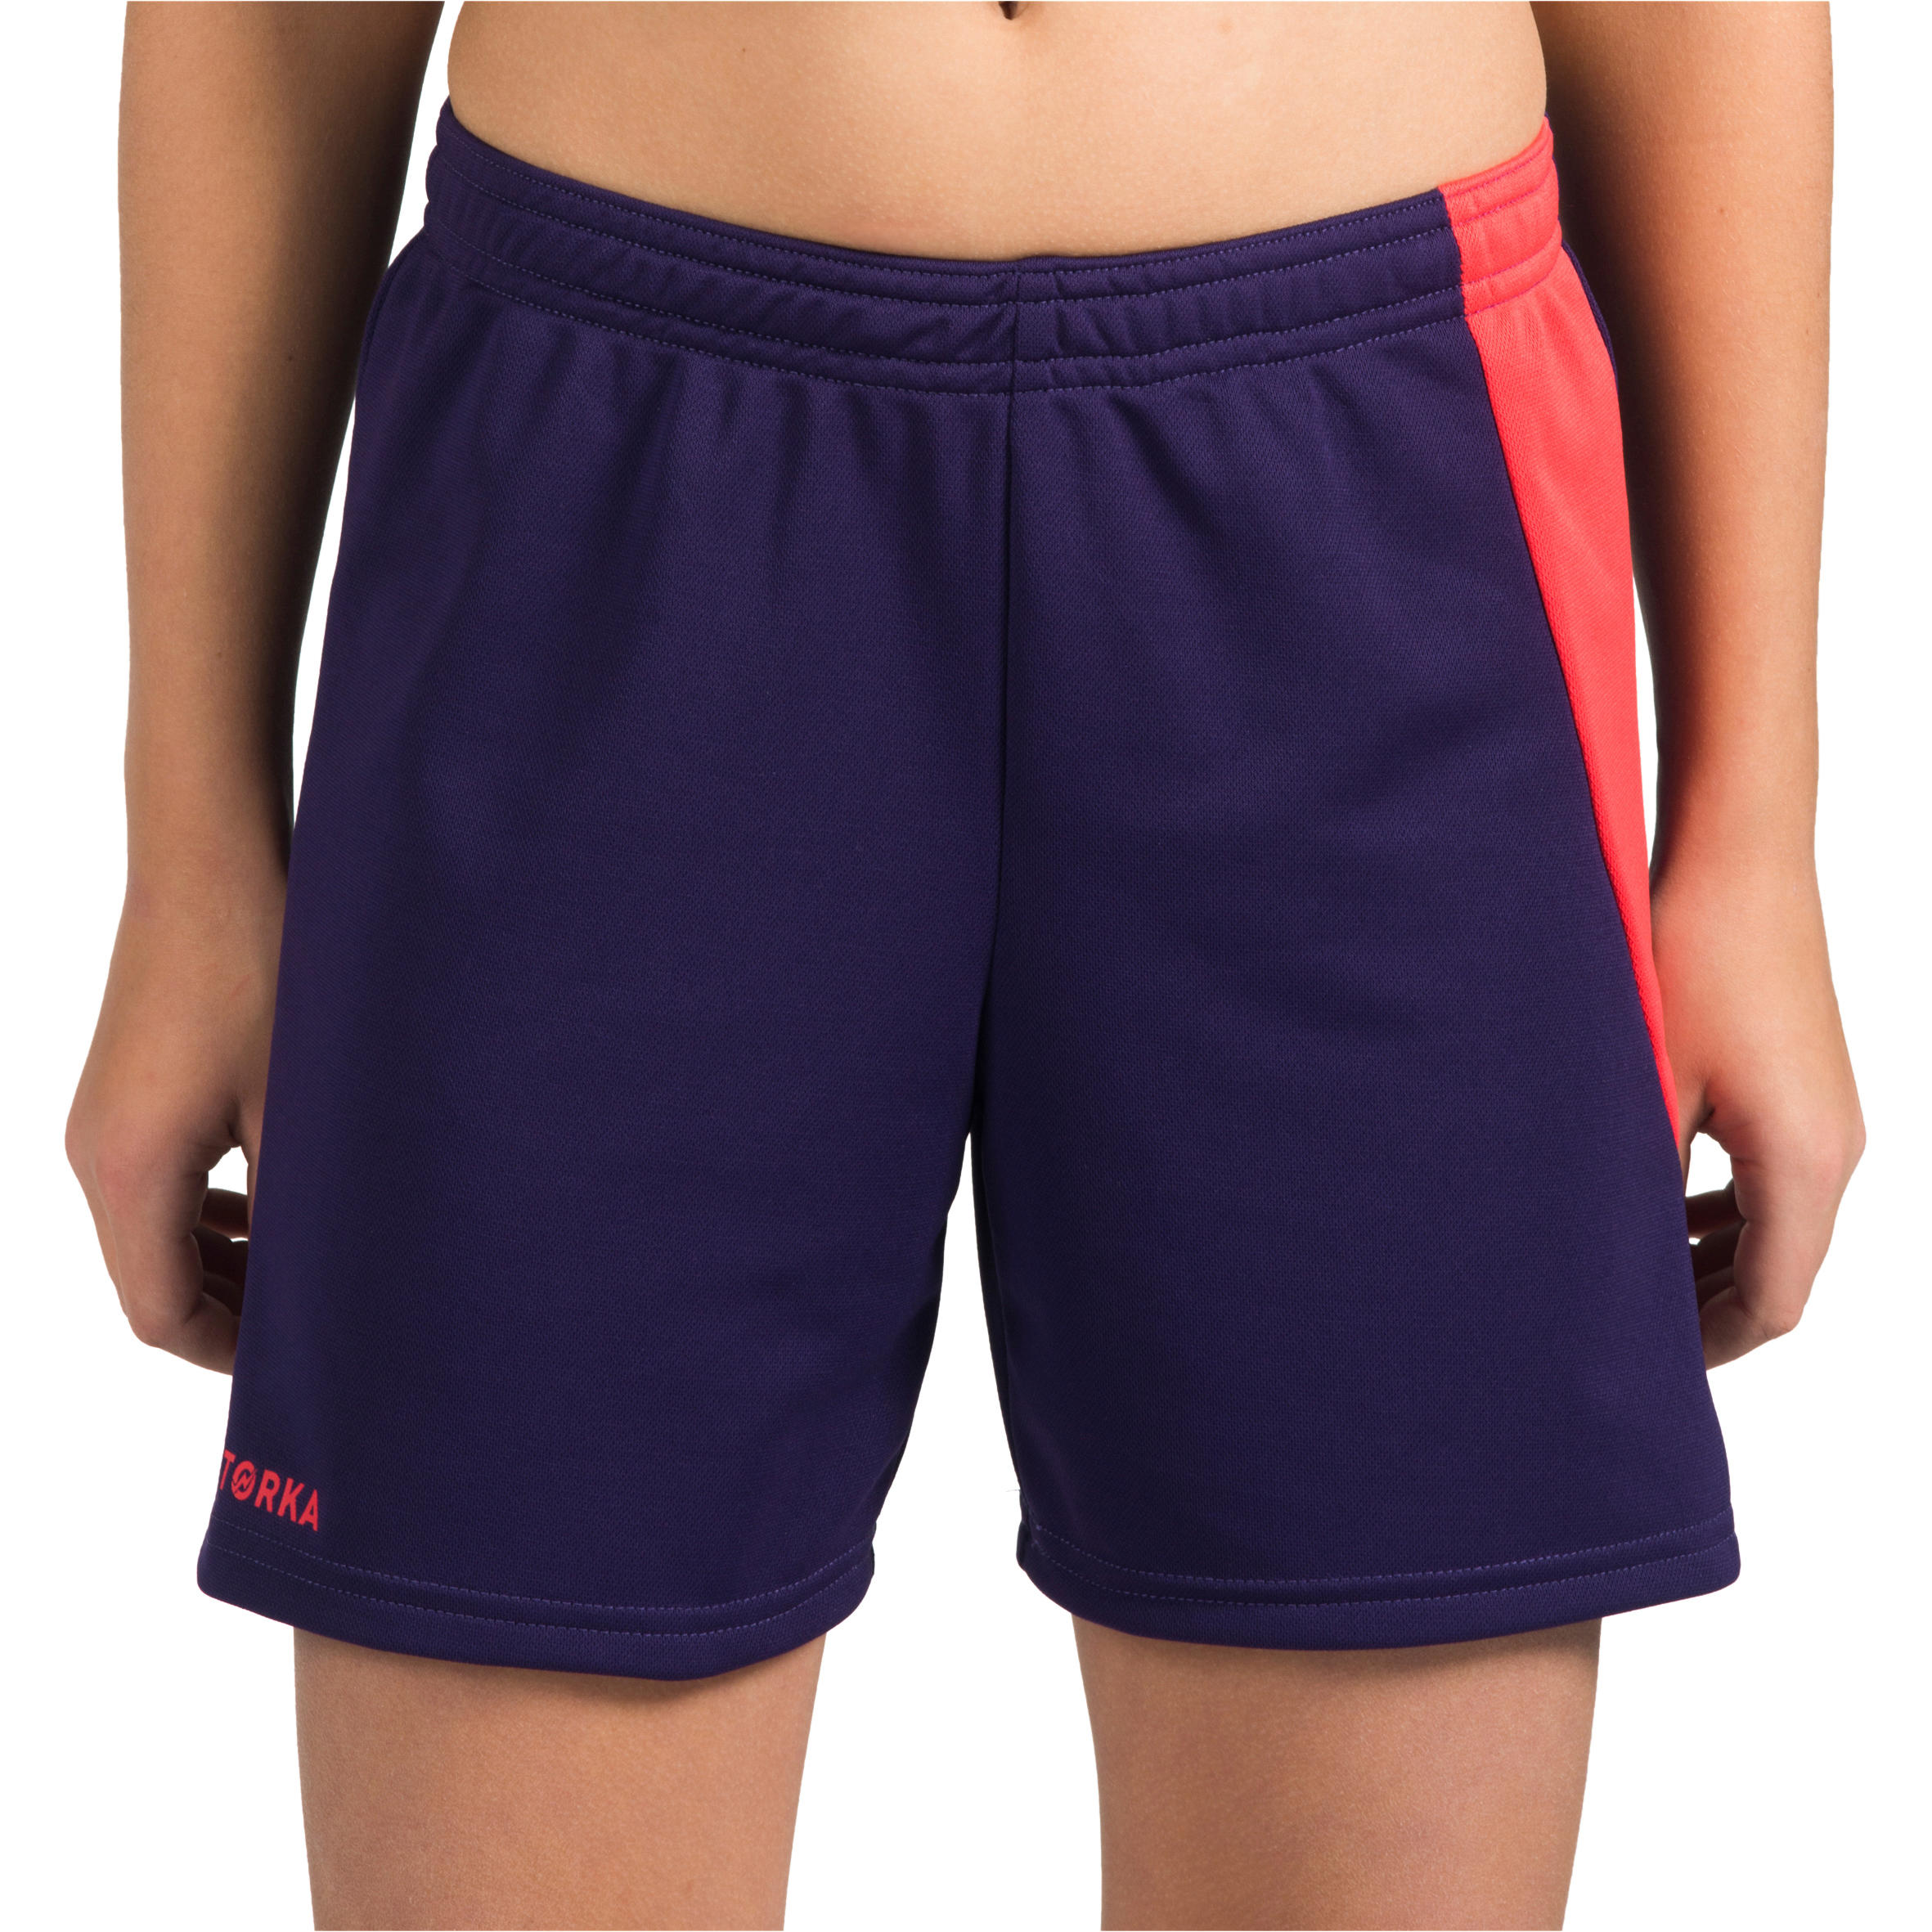 H100 Kids' Handball Shorts - Purple/Pink 7/11